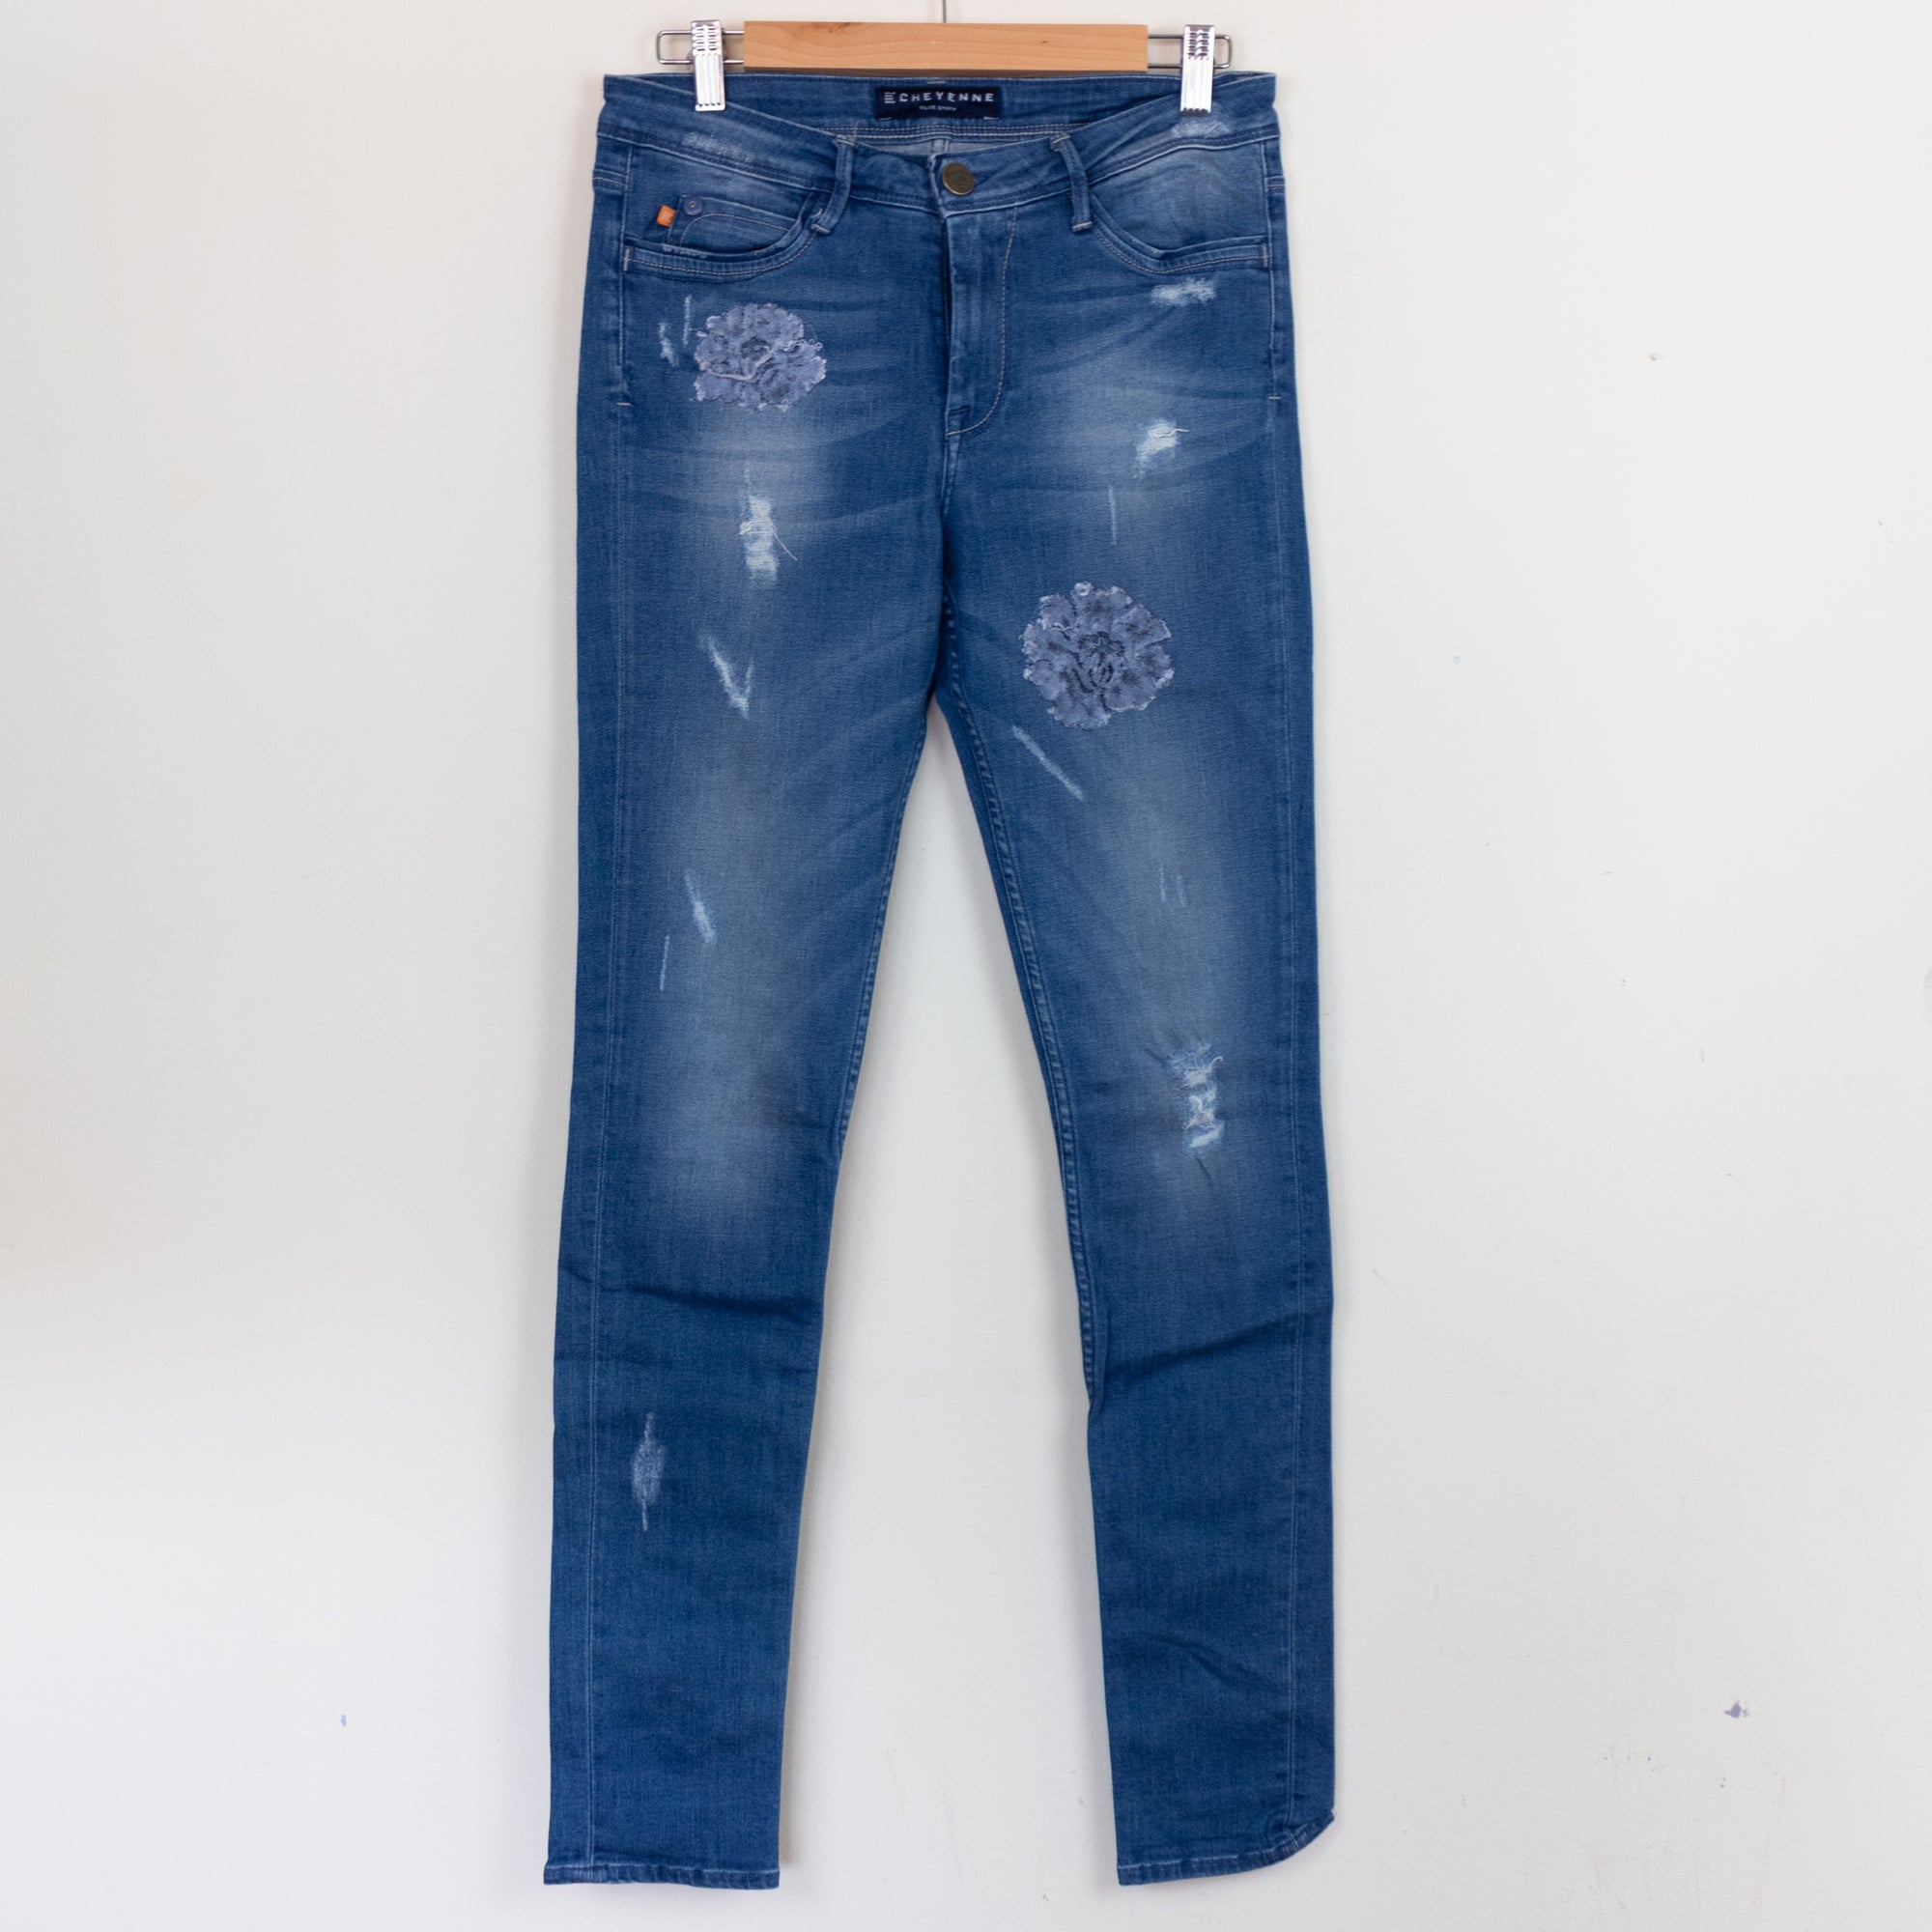 Cheyenne Jeans